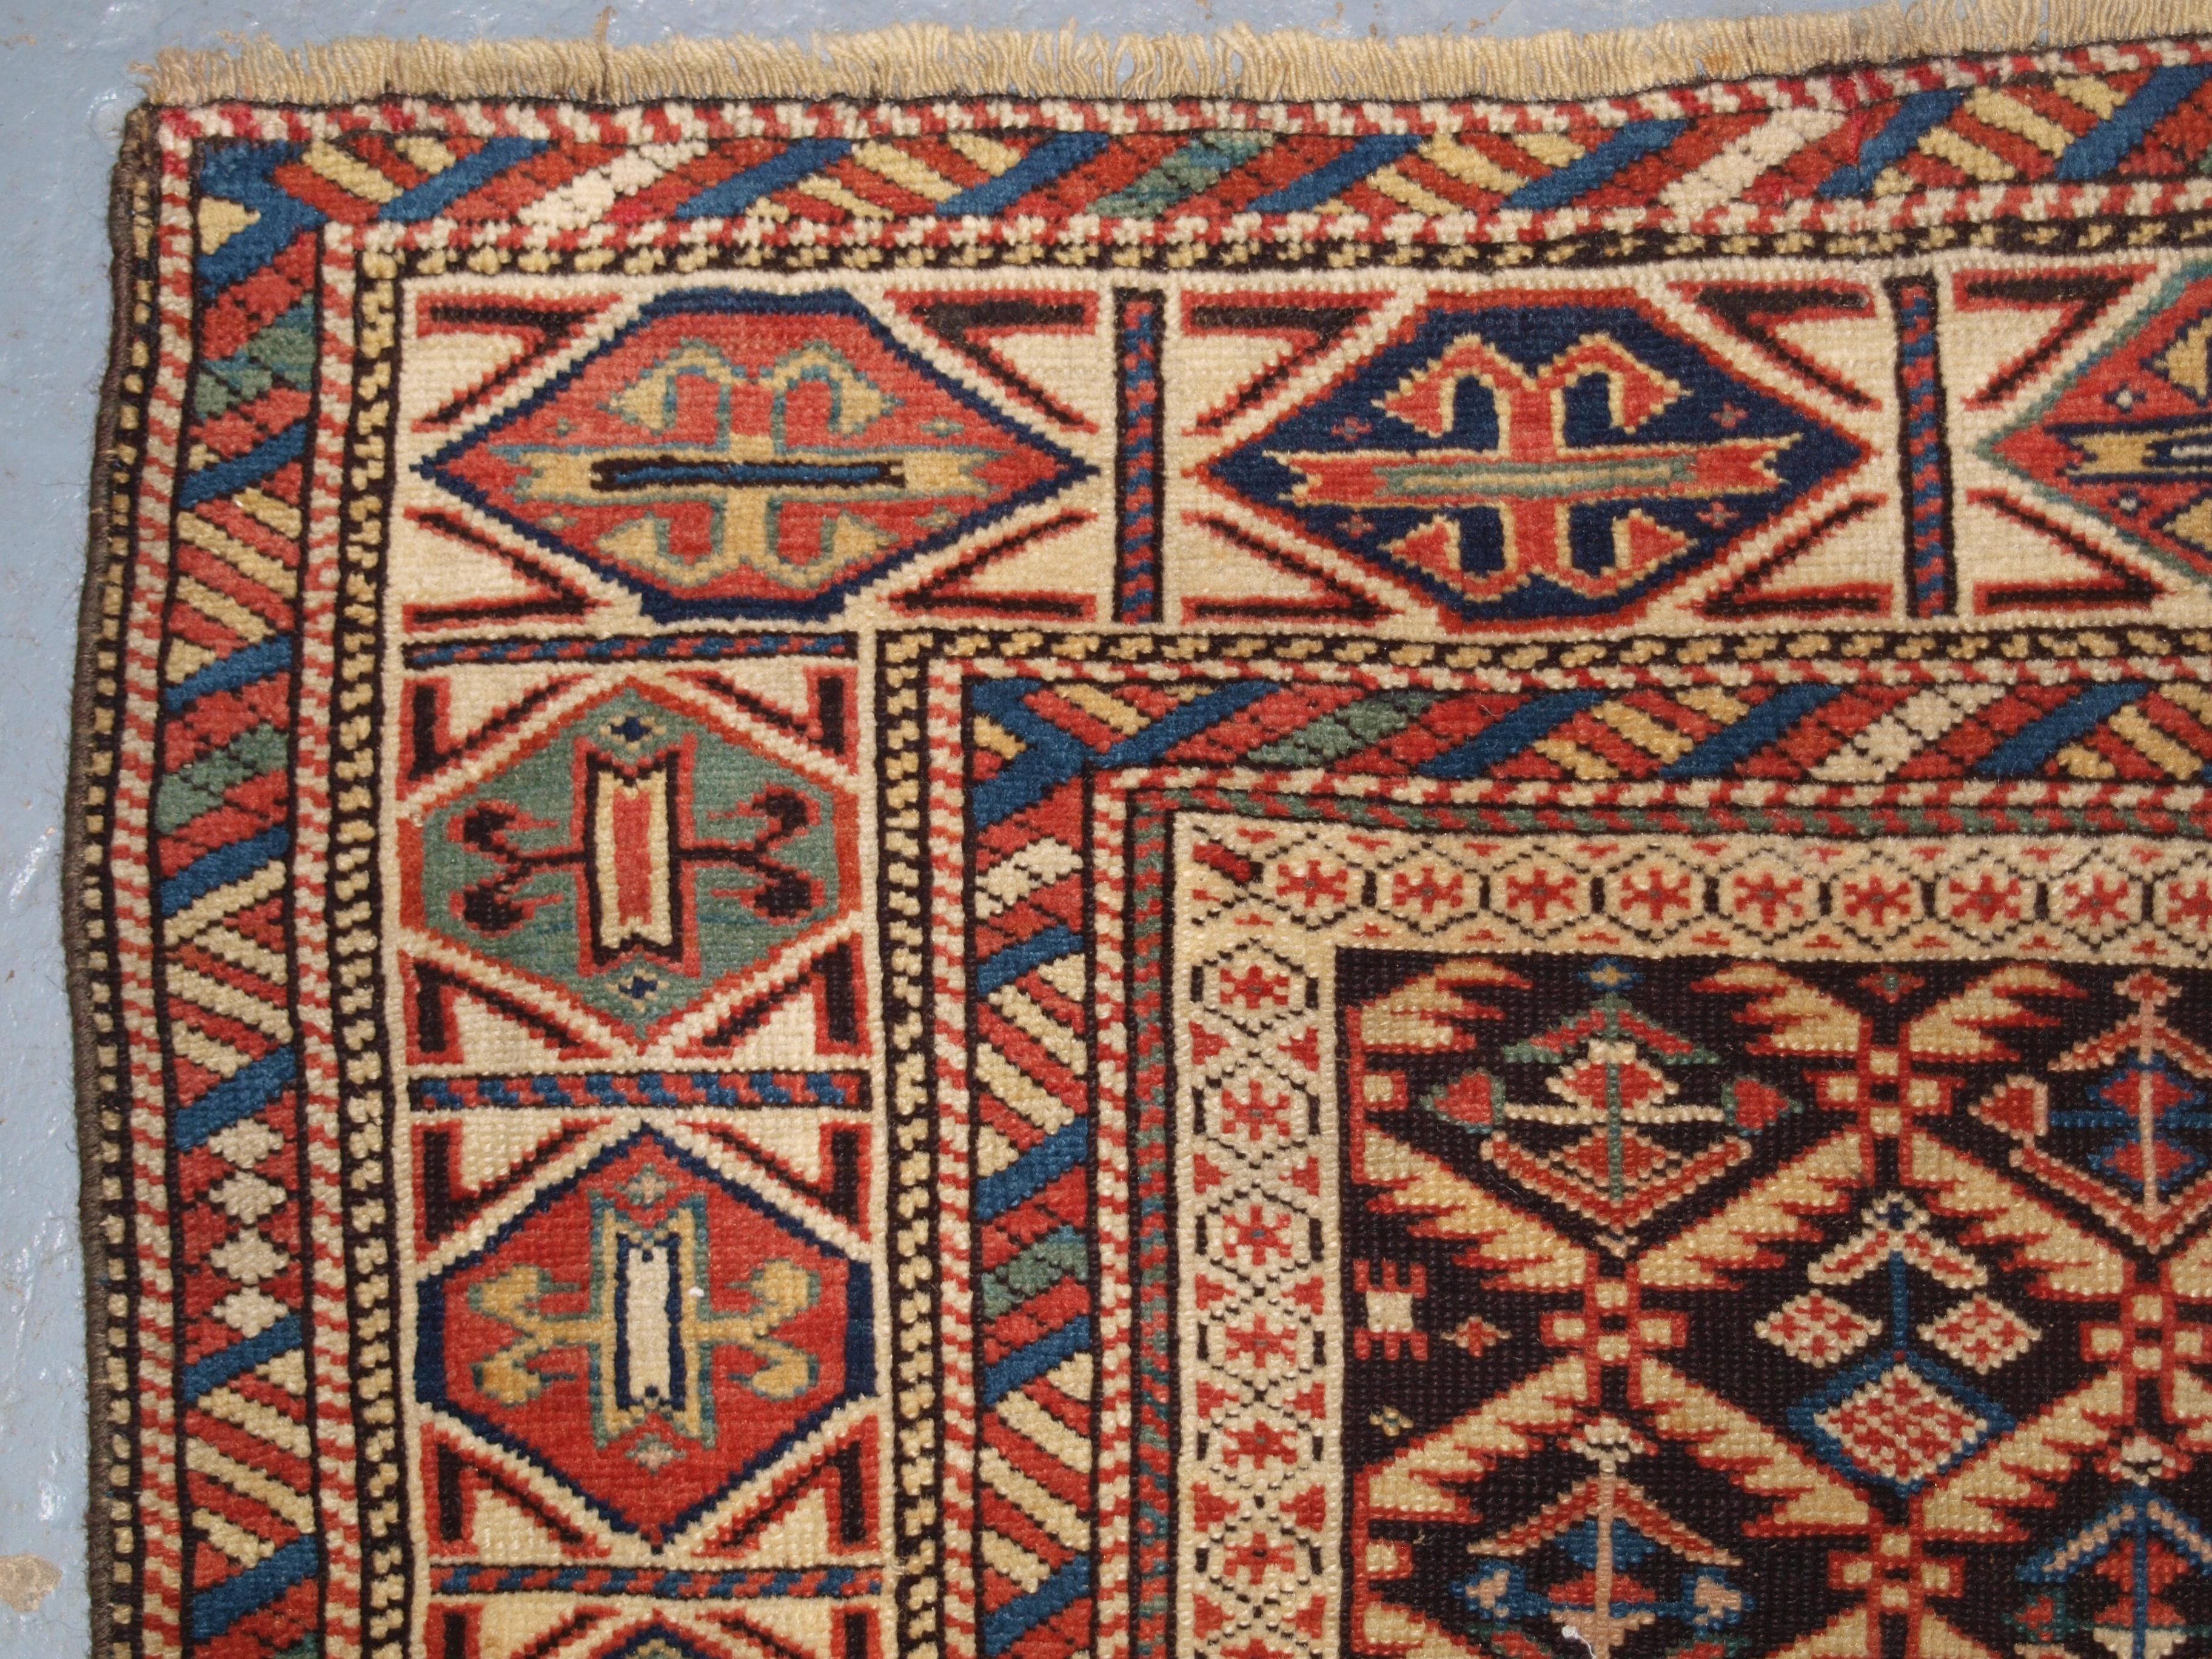 Wool Antique Caucasian Dagestan Rug with Lattice Design on Dark Charcoal Ground